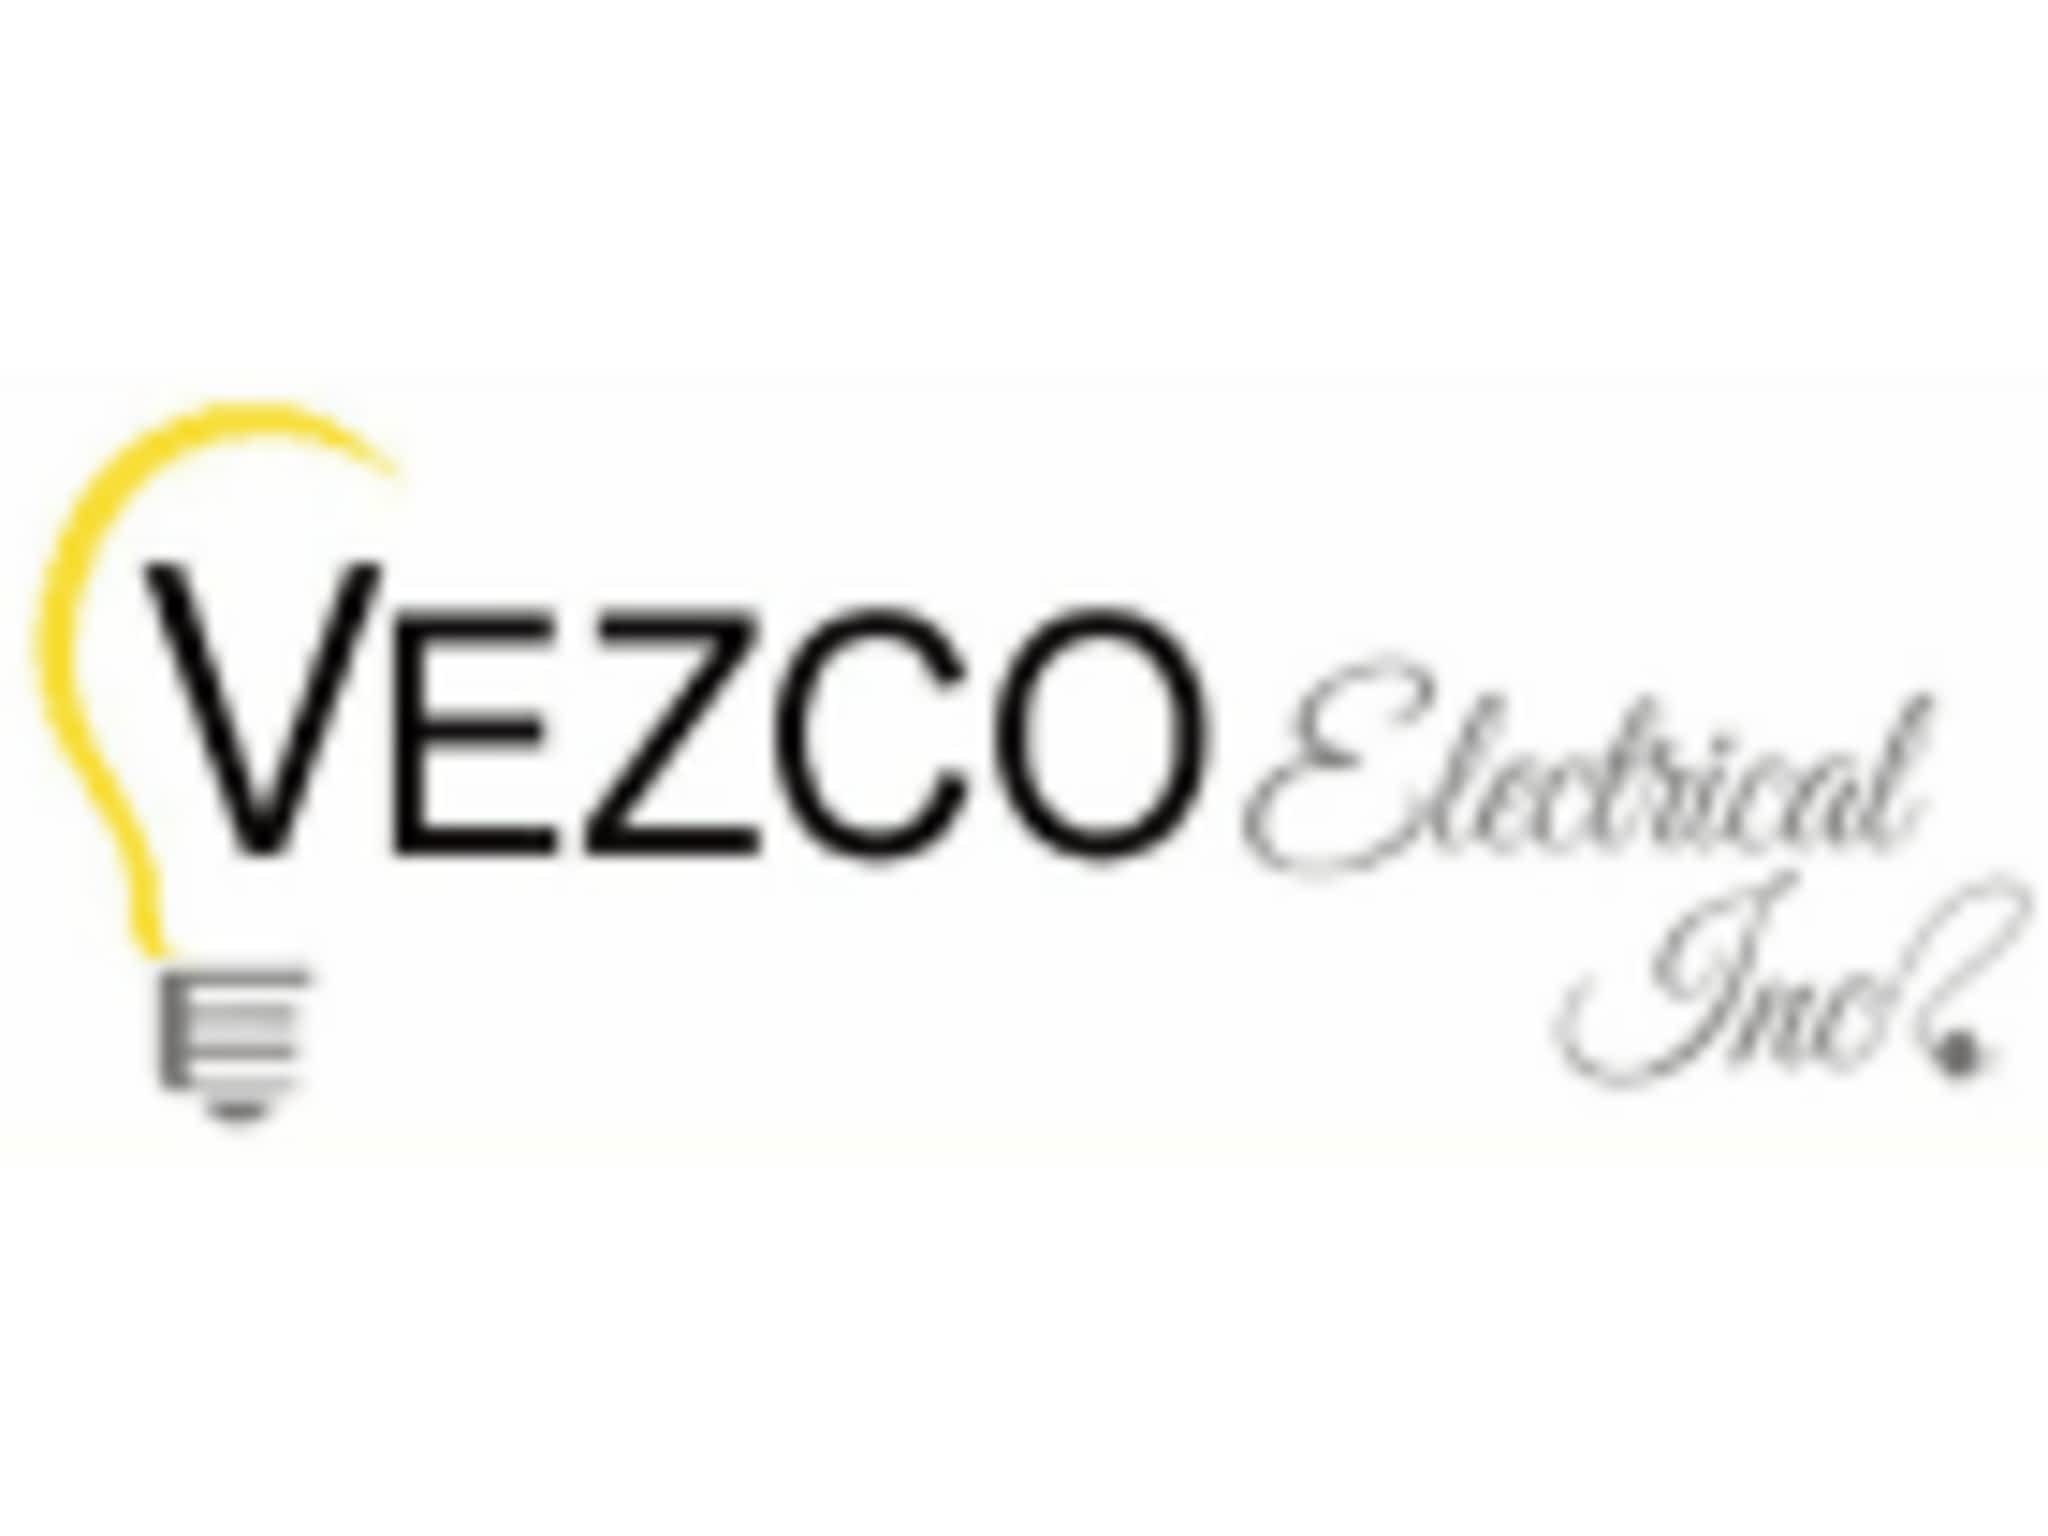 photo VEZCO Electrical Inc